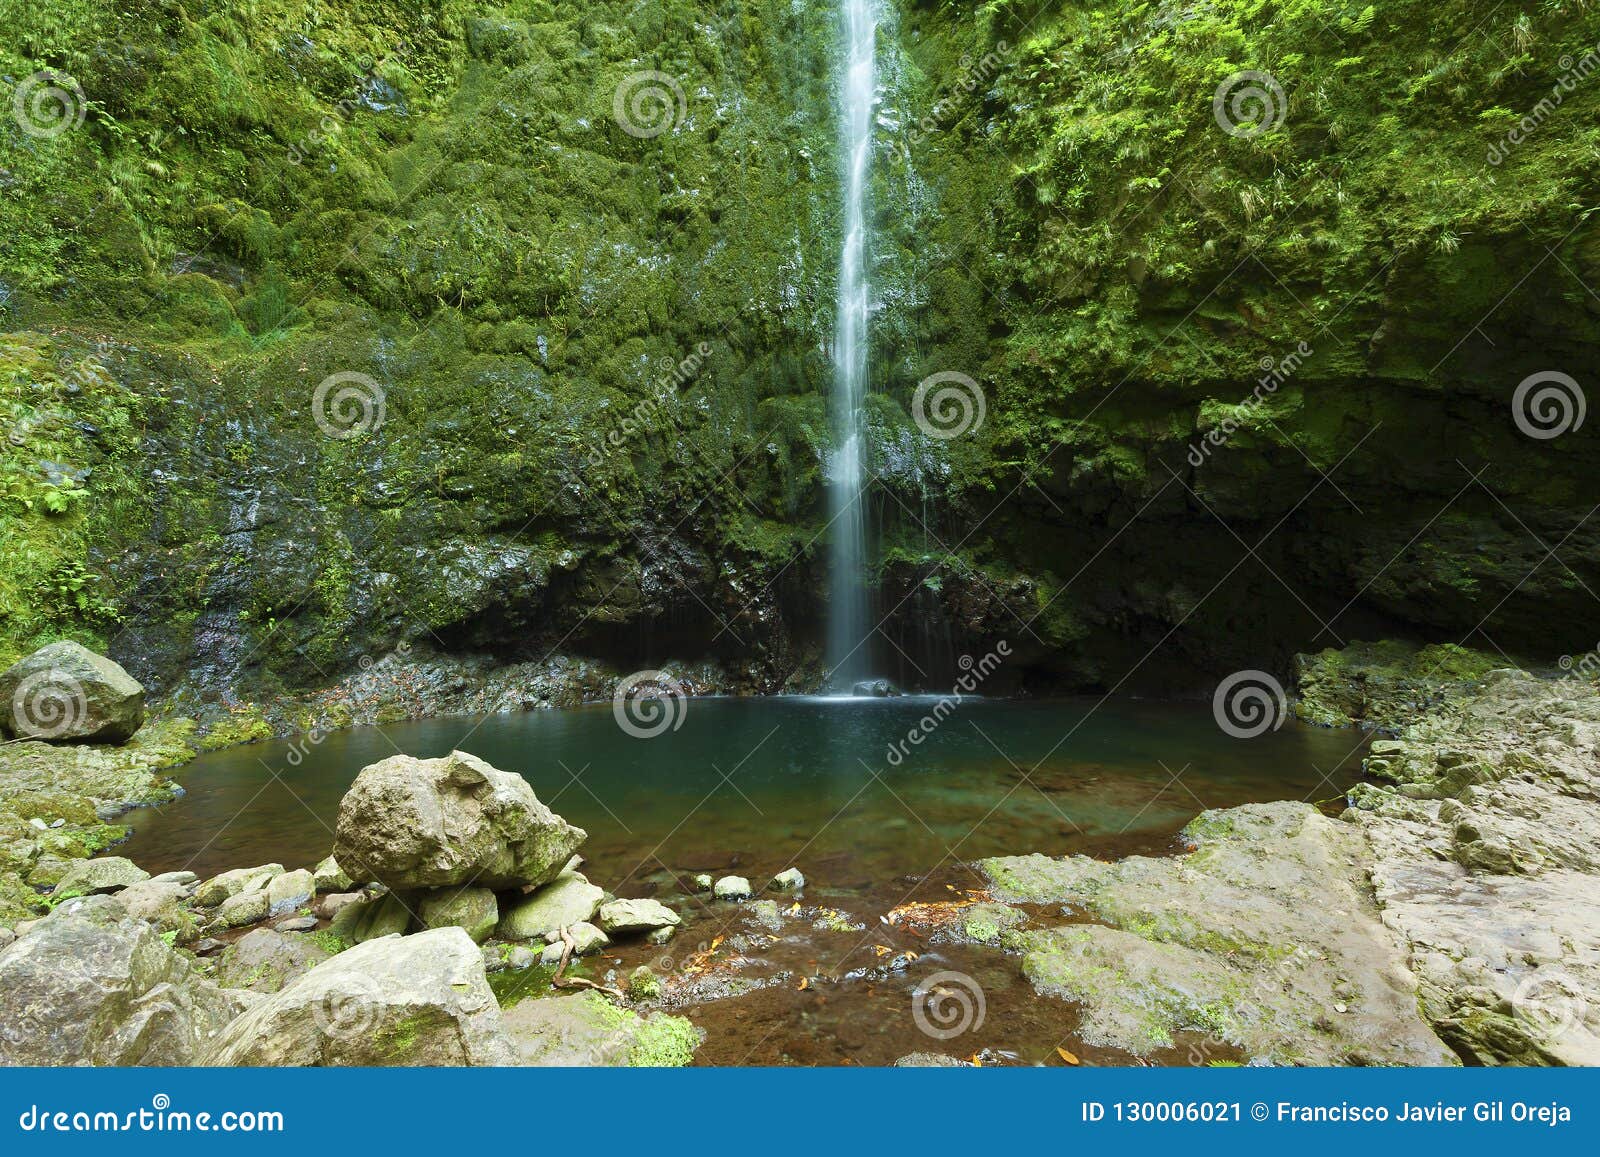 caldeirao verde waterfall